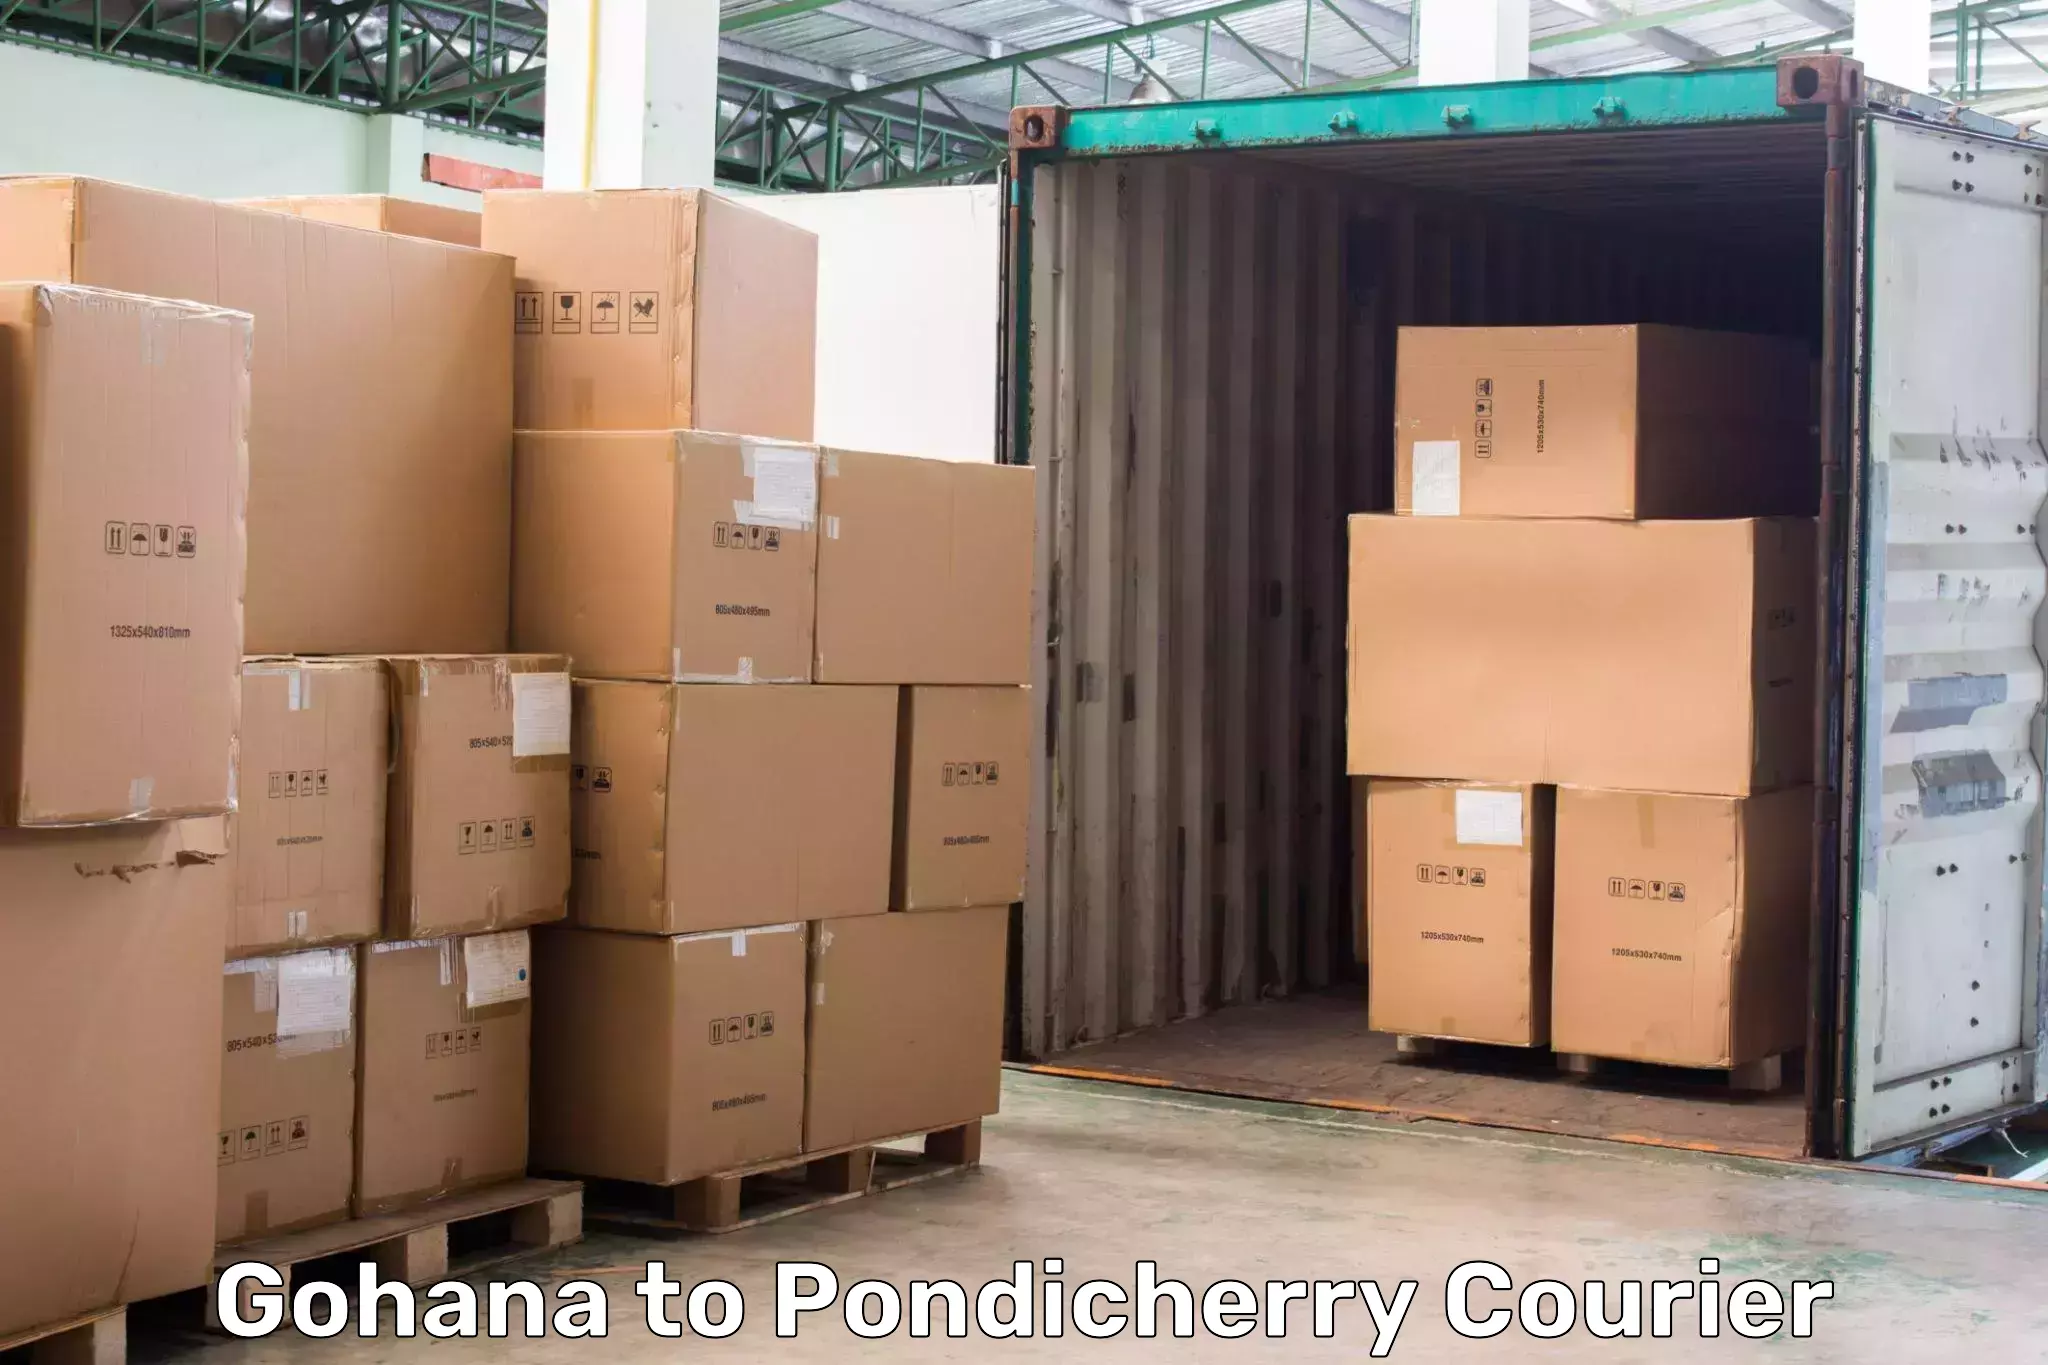 24/7 courier service in Gohana to Pondicherry